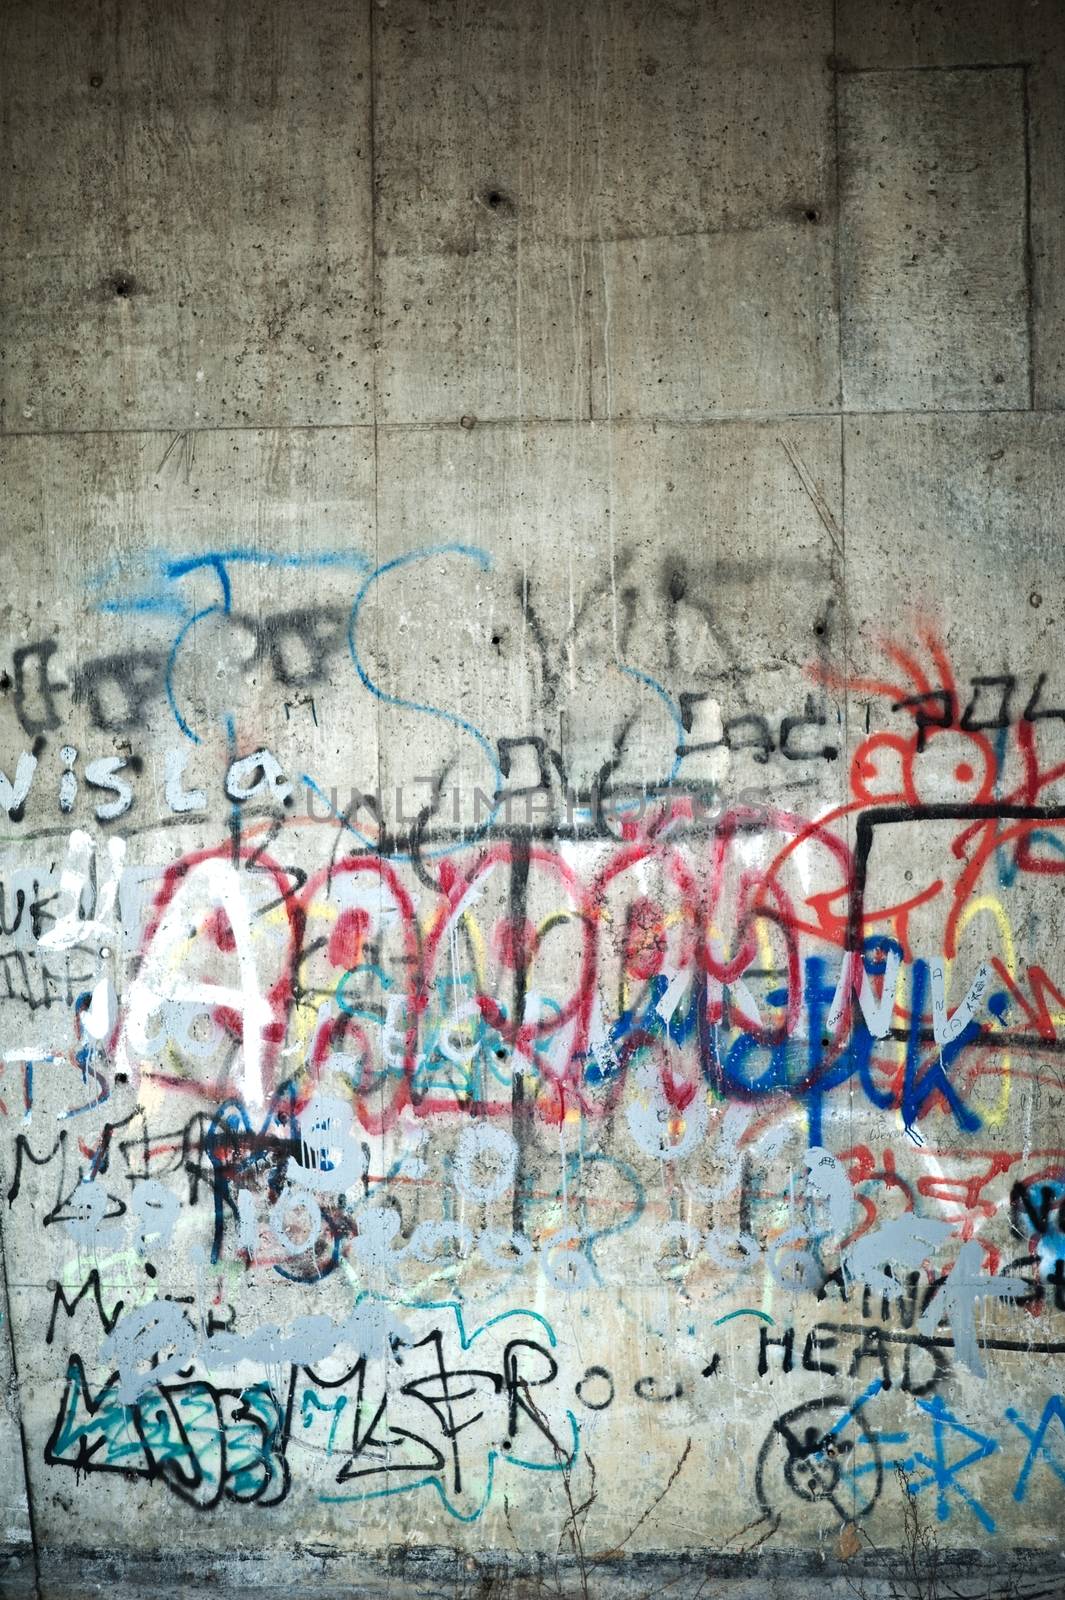 Graffiti Wall by welcomia